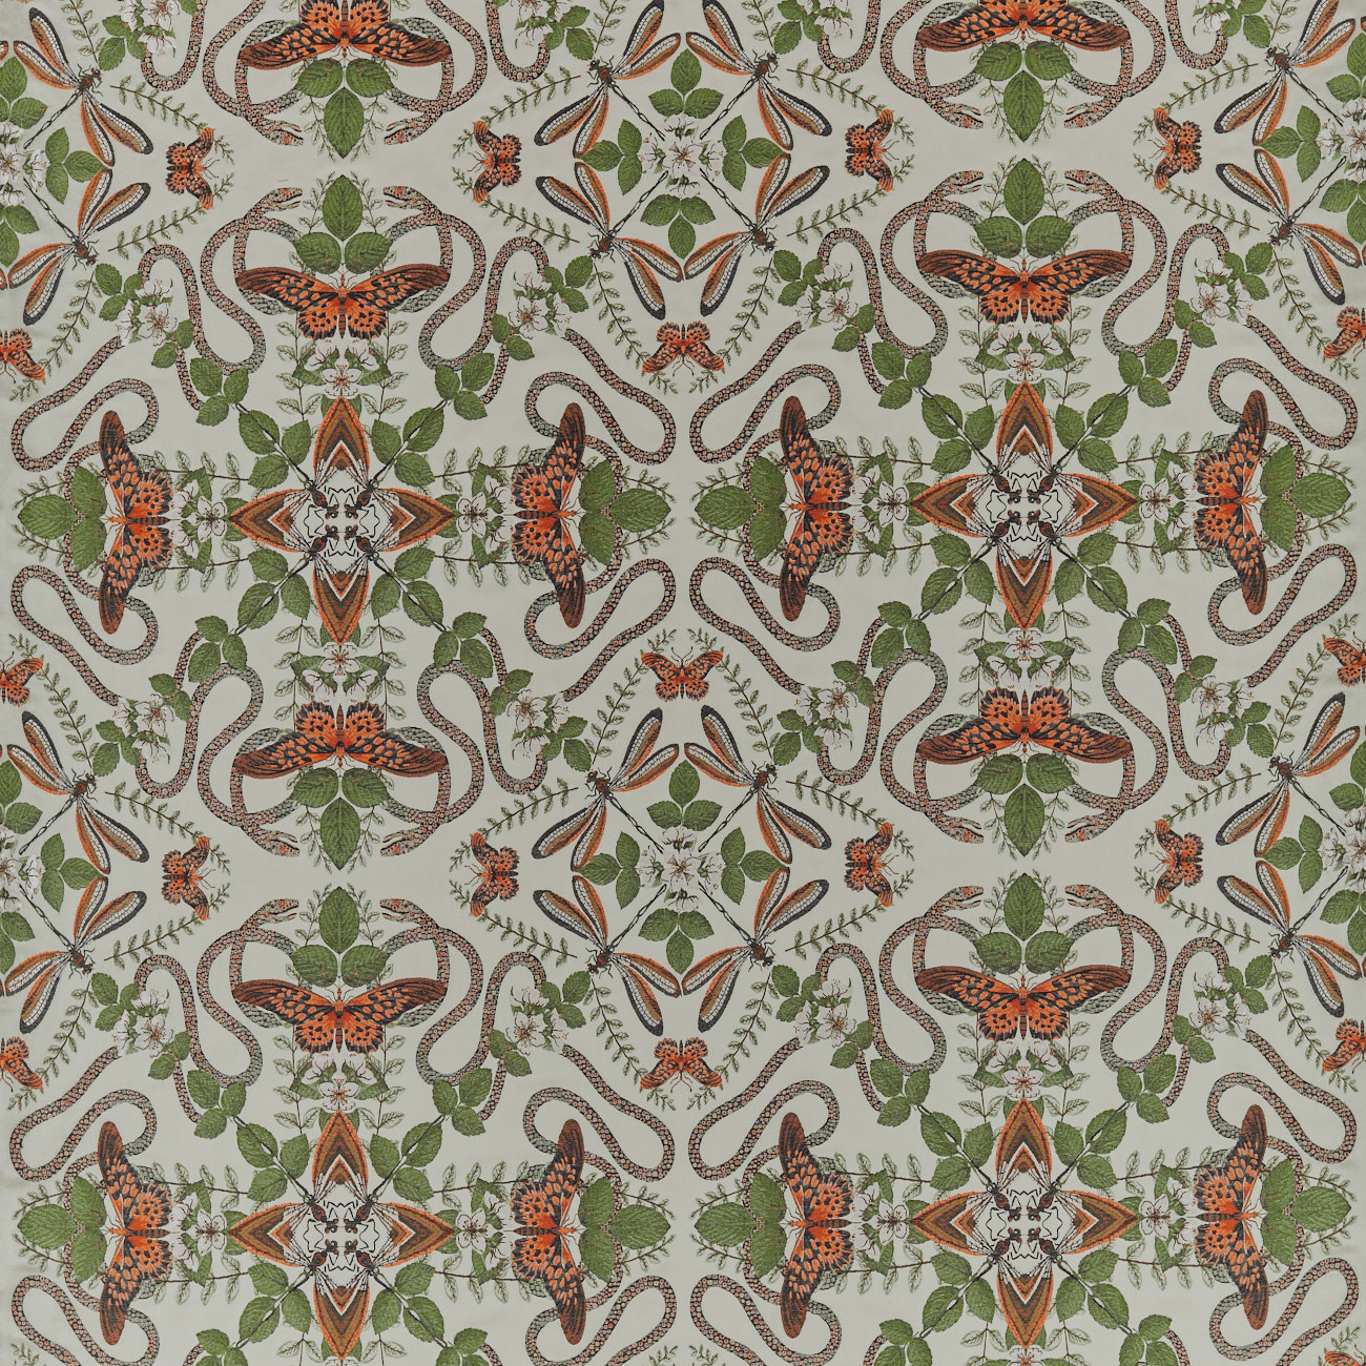 Emerald Forest Fabric by Wedgwood - F1581/03 - Smoke Jacquard